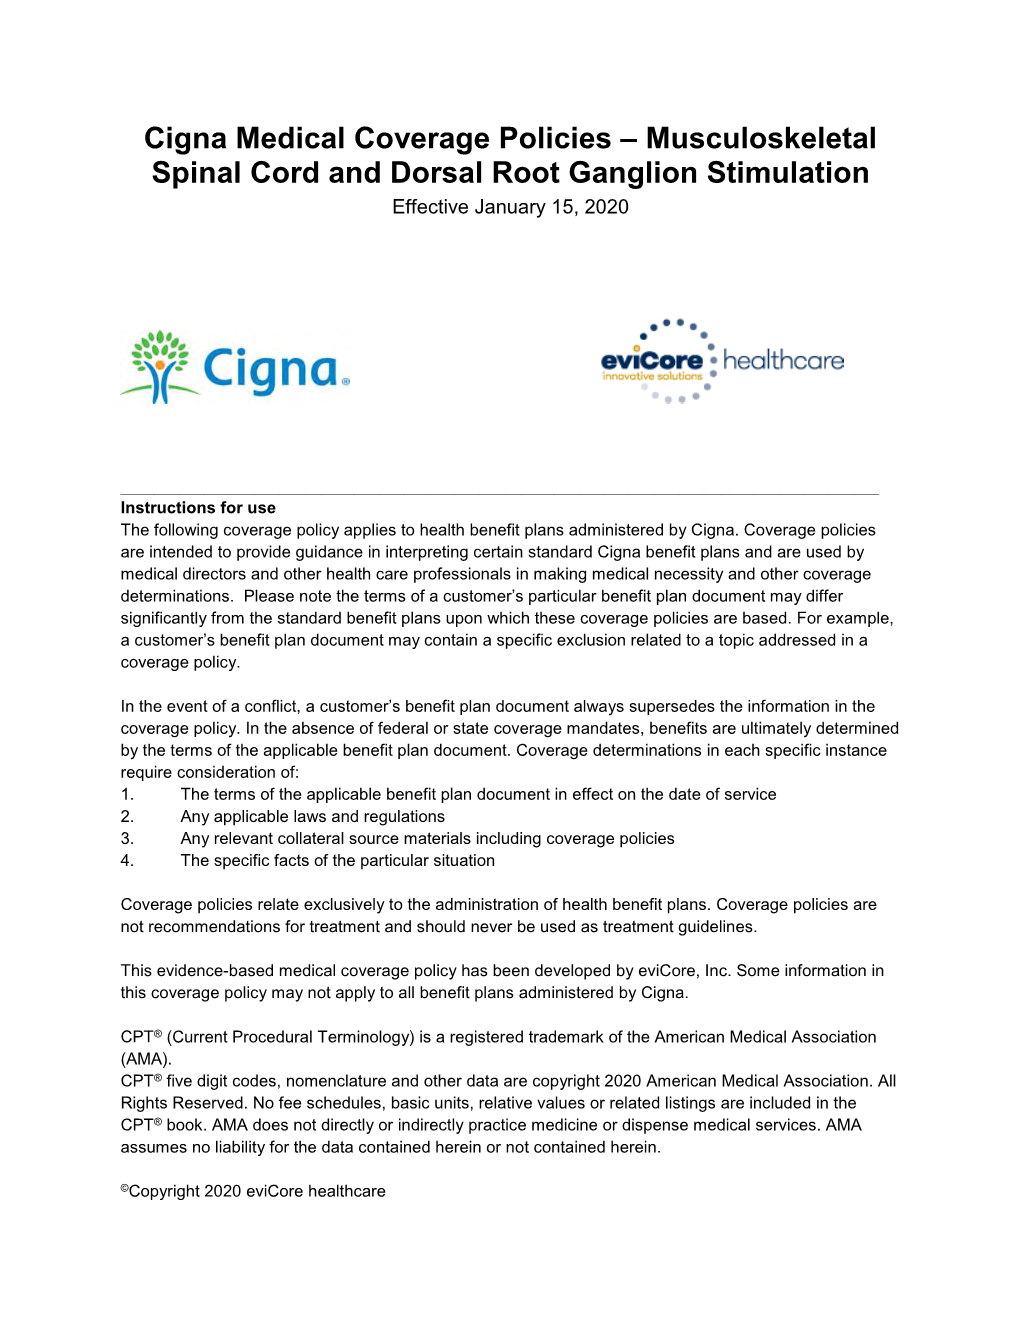 Cigna CMM-211 Spinal Cord Stimulators